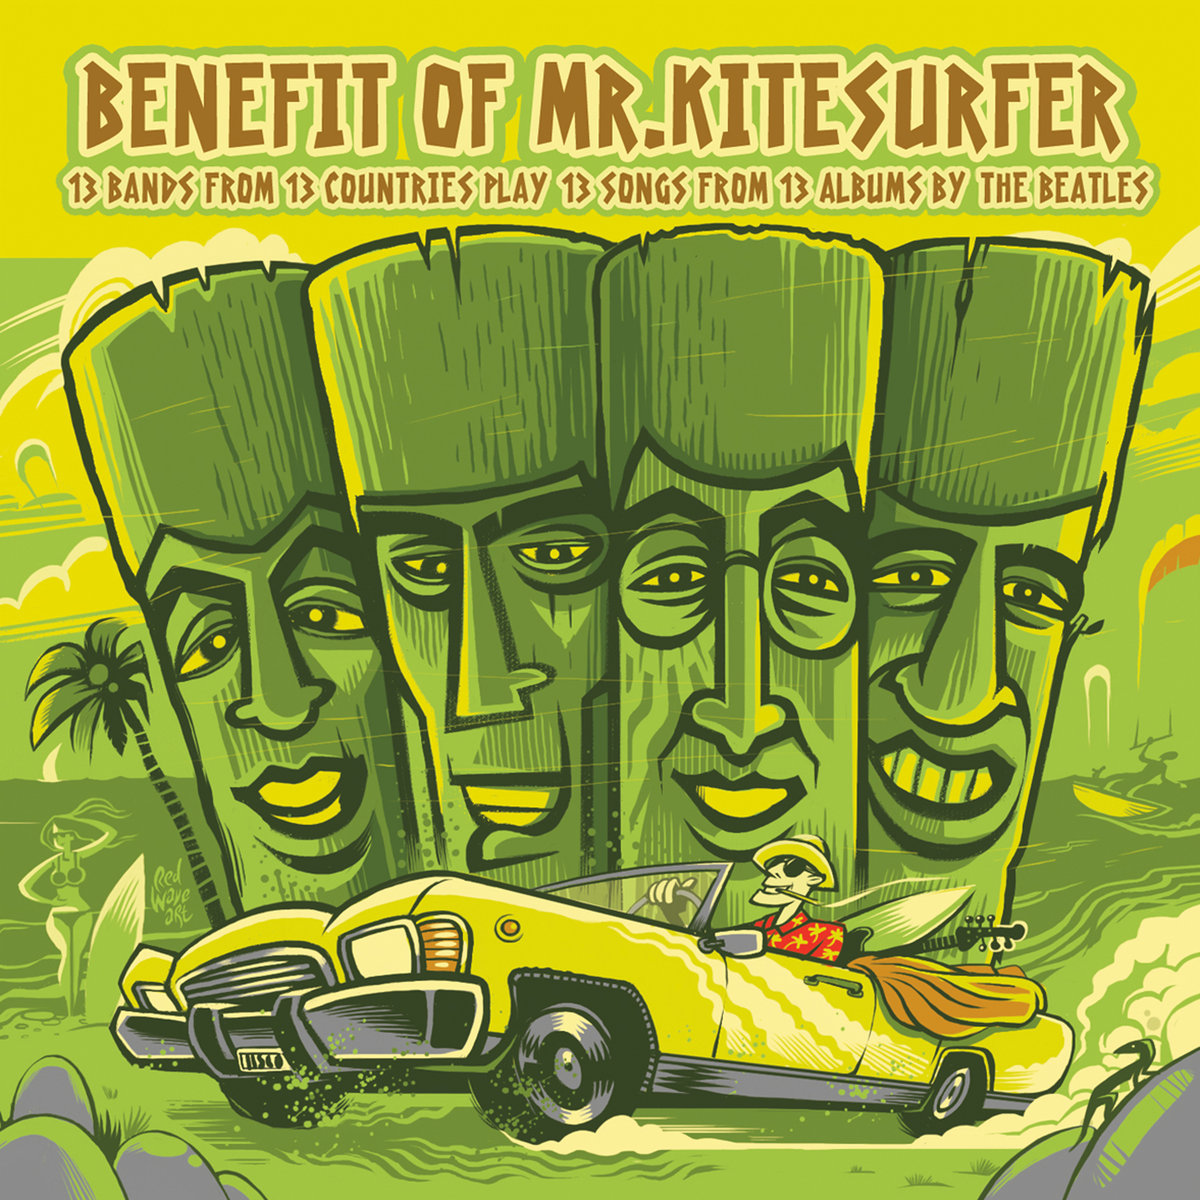 a1017913319_10 Various Artists "Benefit Of Mr Kitesurfer" - SHARAWAJI.COM